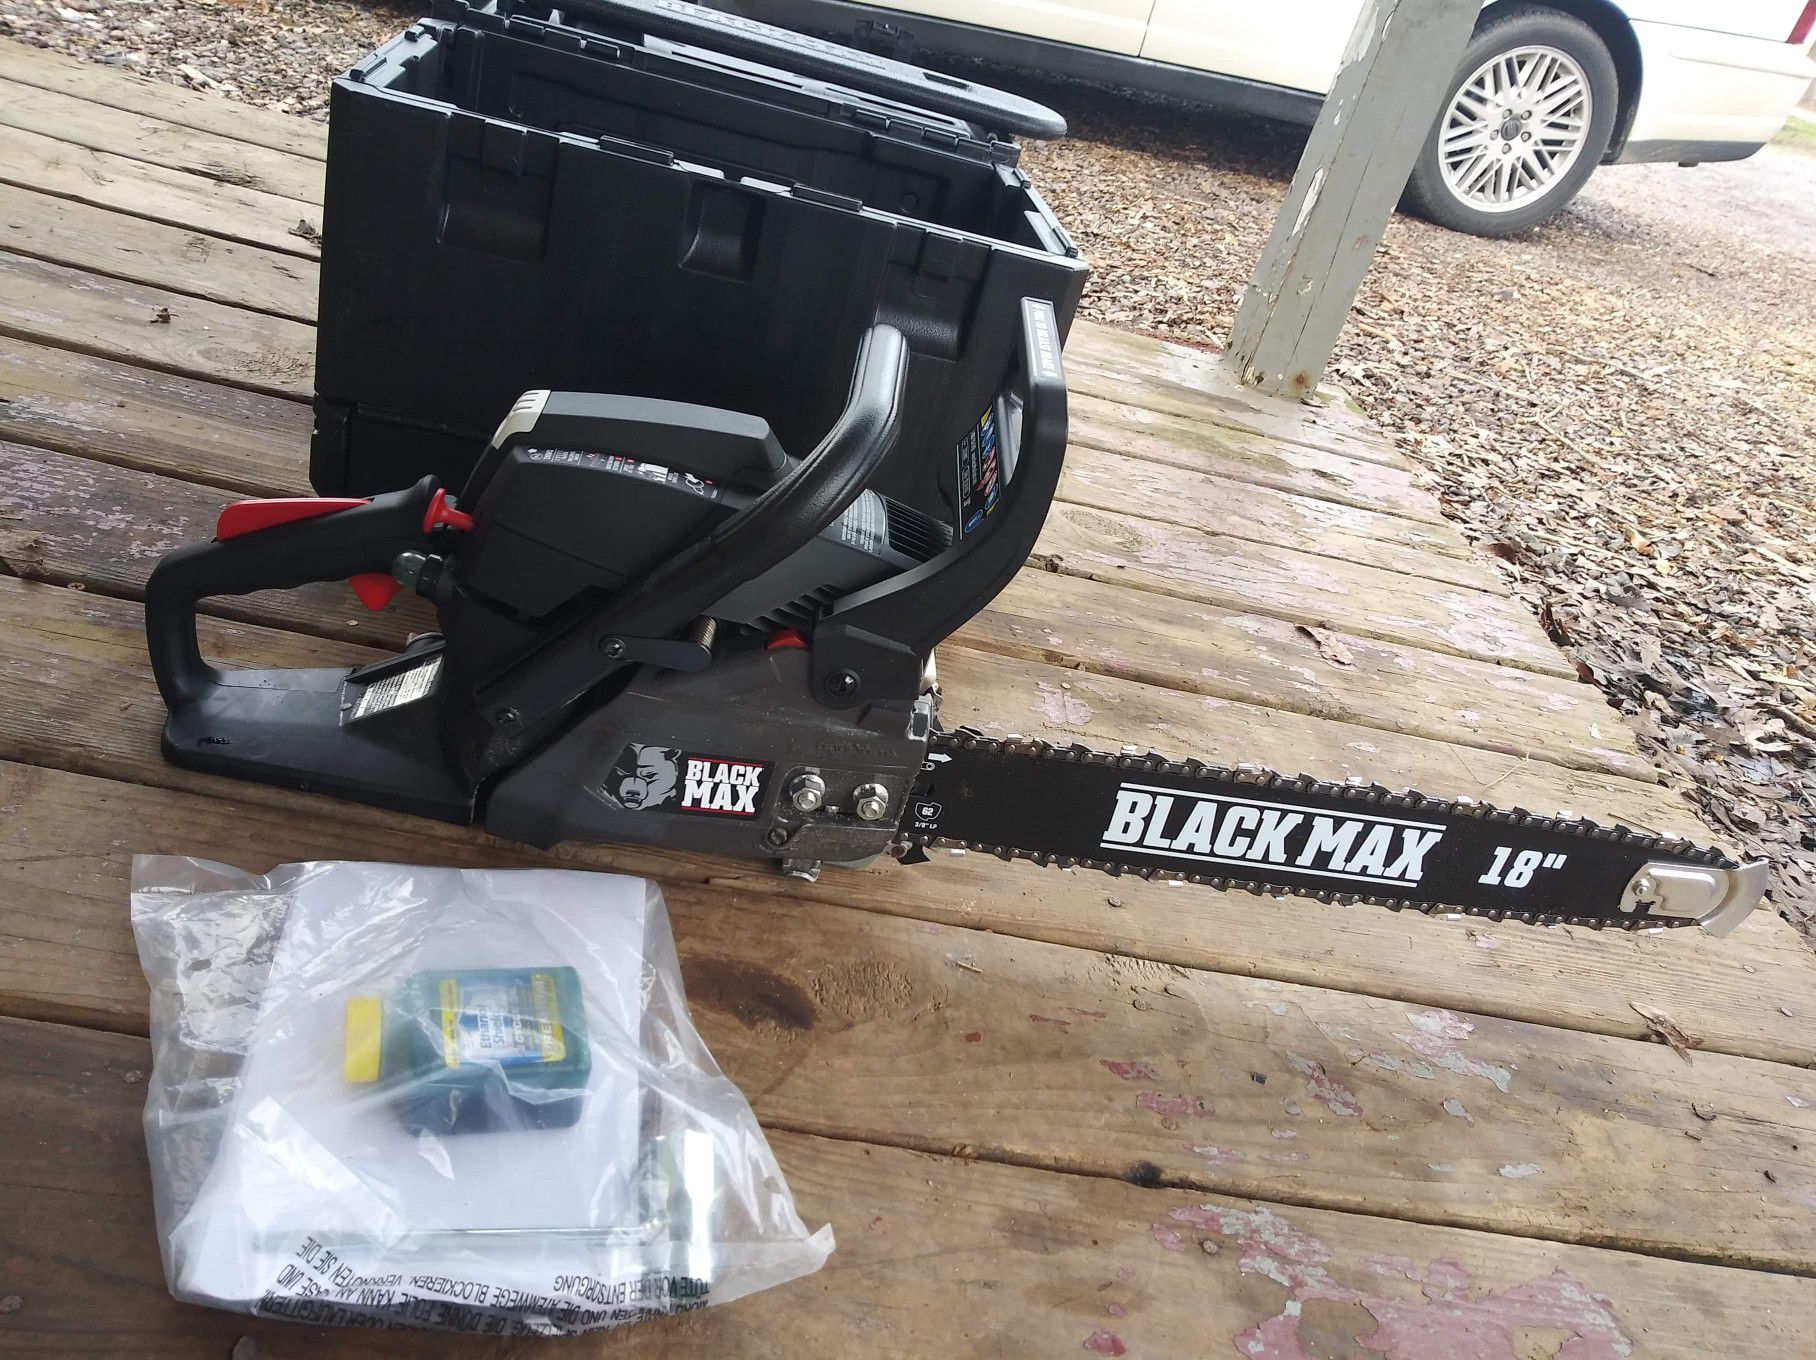 Brand new black max chainsaw 18"